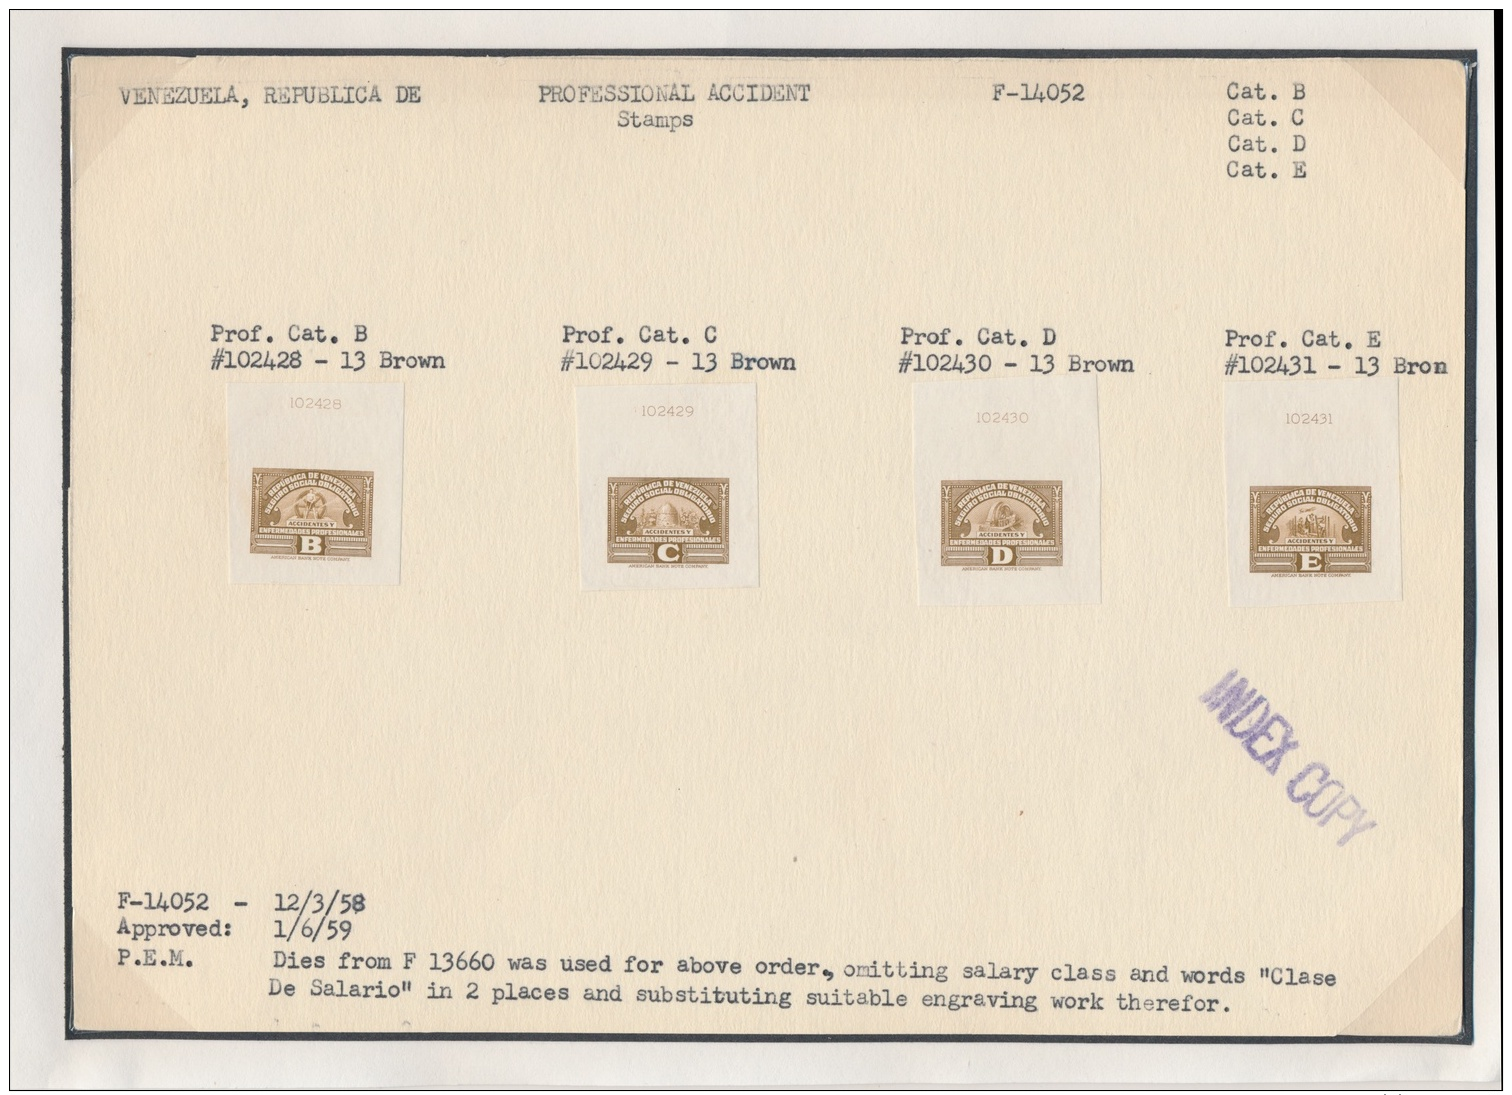 E/P 1955-59 Set Of Professional Accident Specimen Stamps And Die Proofs, Inscribed Republica De... - Venezuela